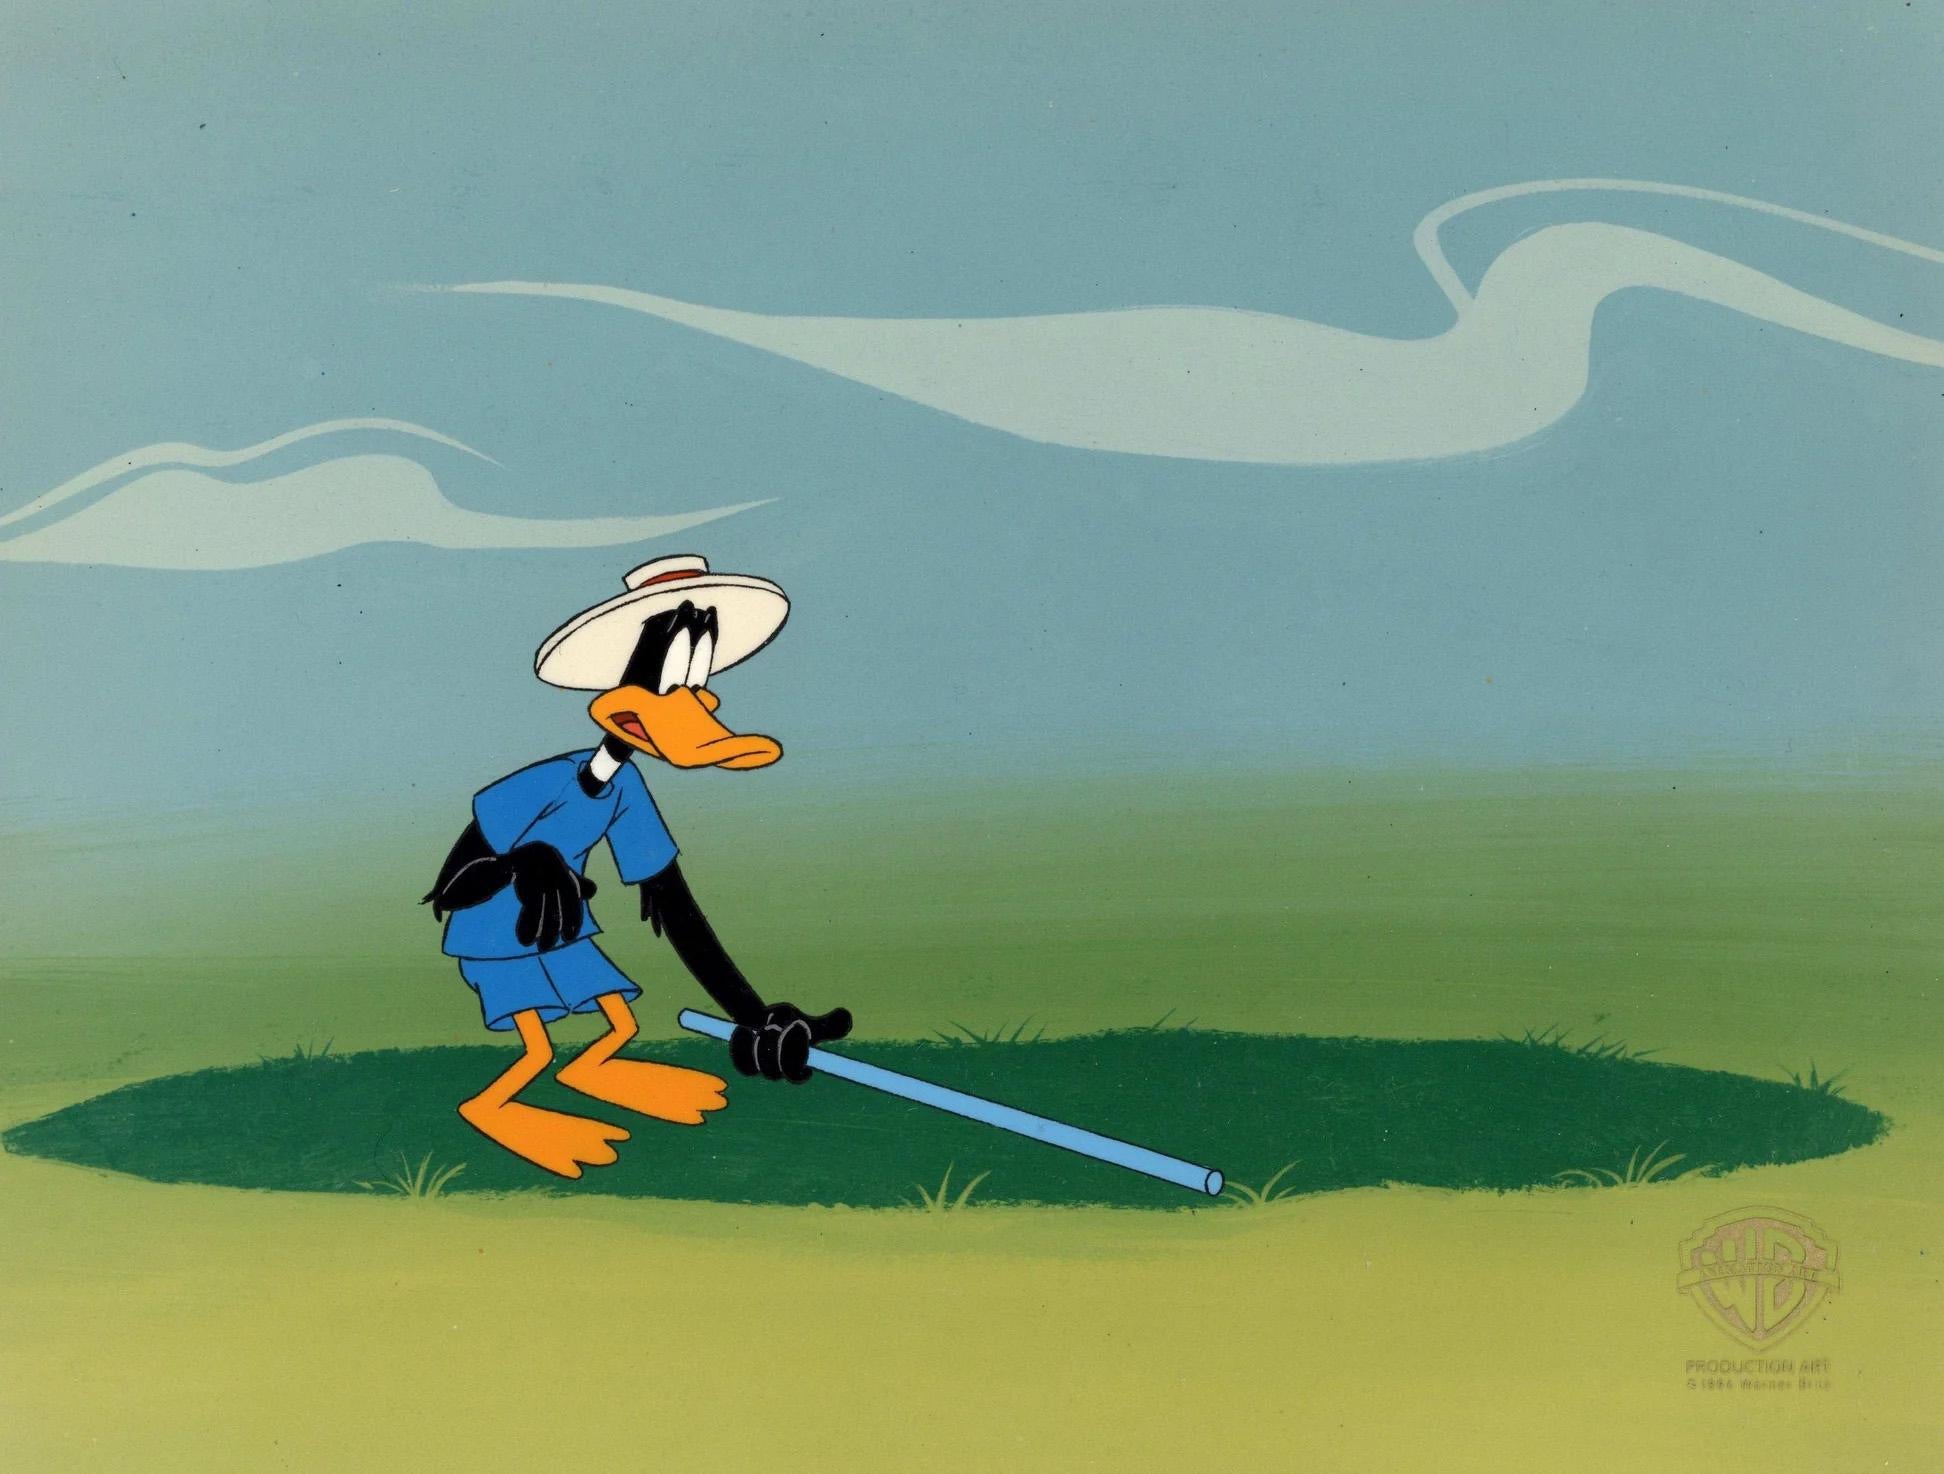 Looney Tunes Original Production Cel: Daffy Duck - Art by Looney Tunes Studio Artists